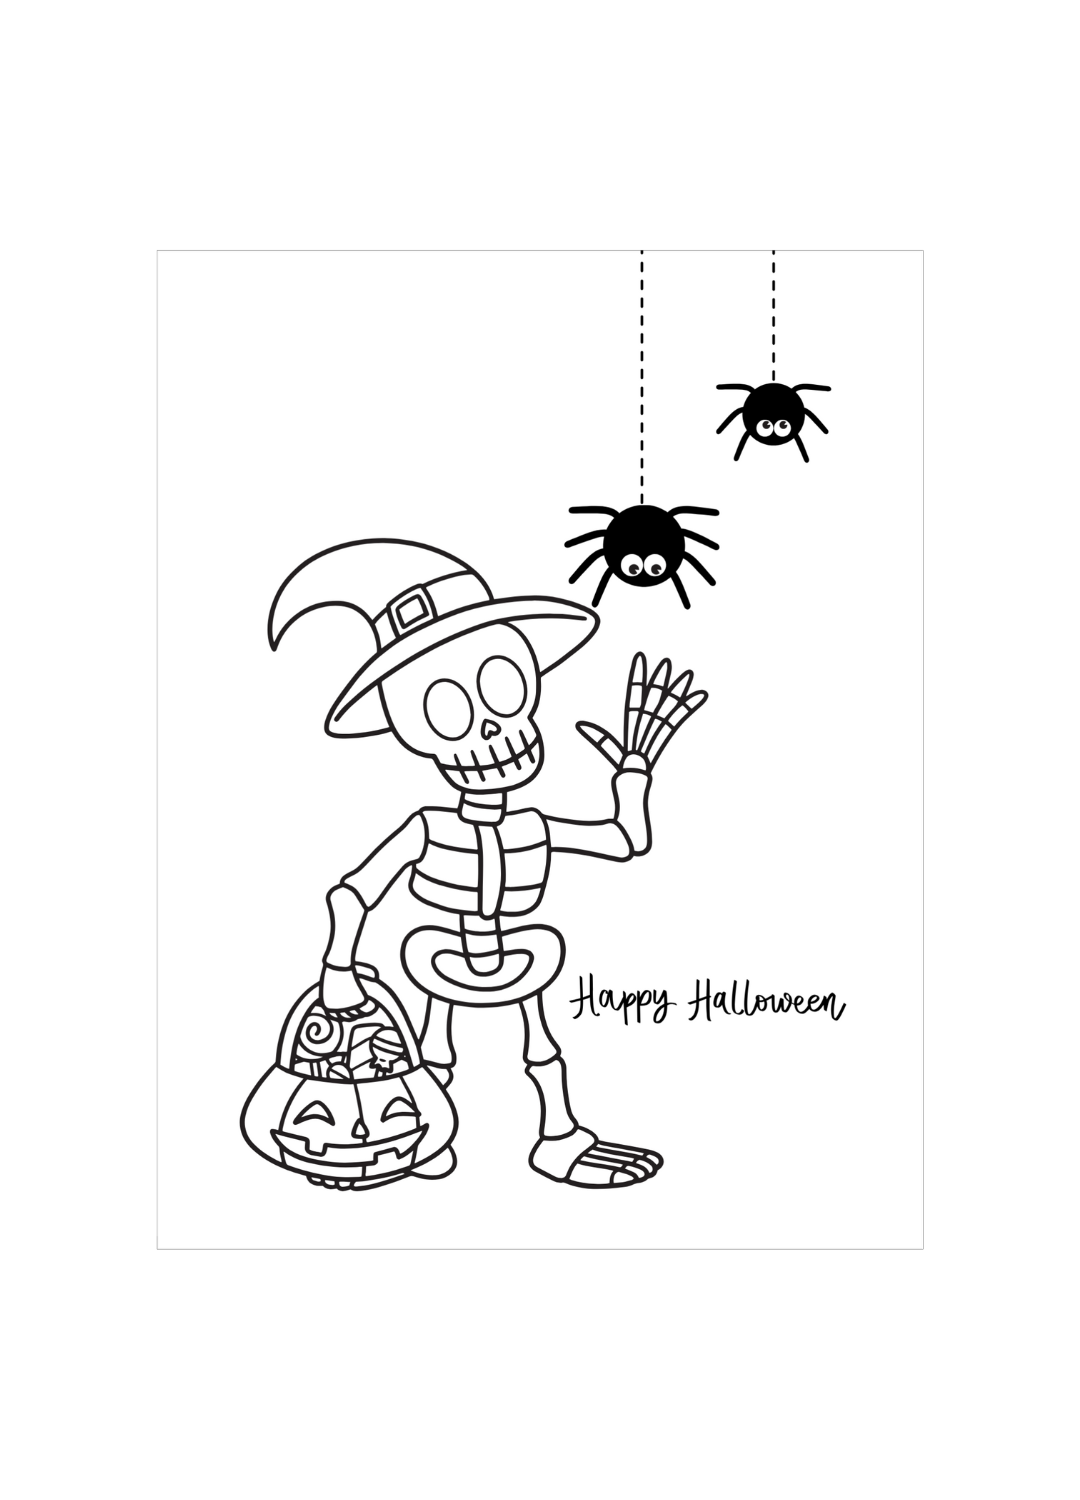 Spooky Adventures: Halloween Coloring Fun for Kids